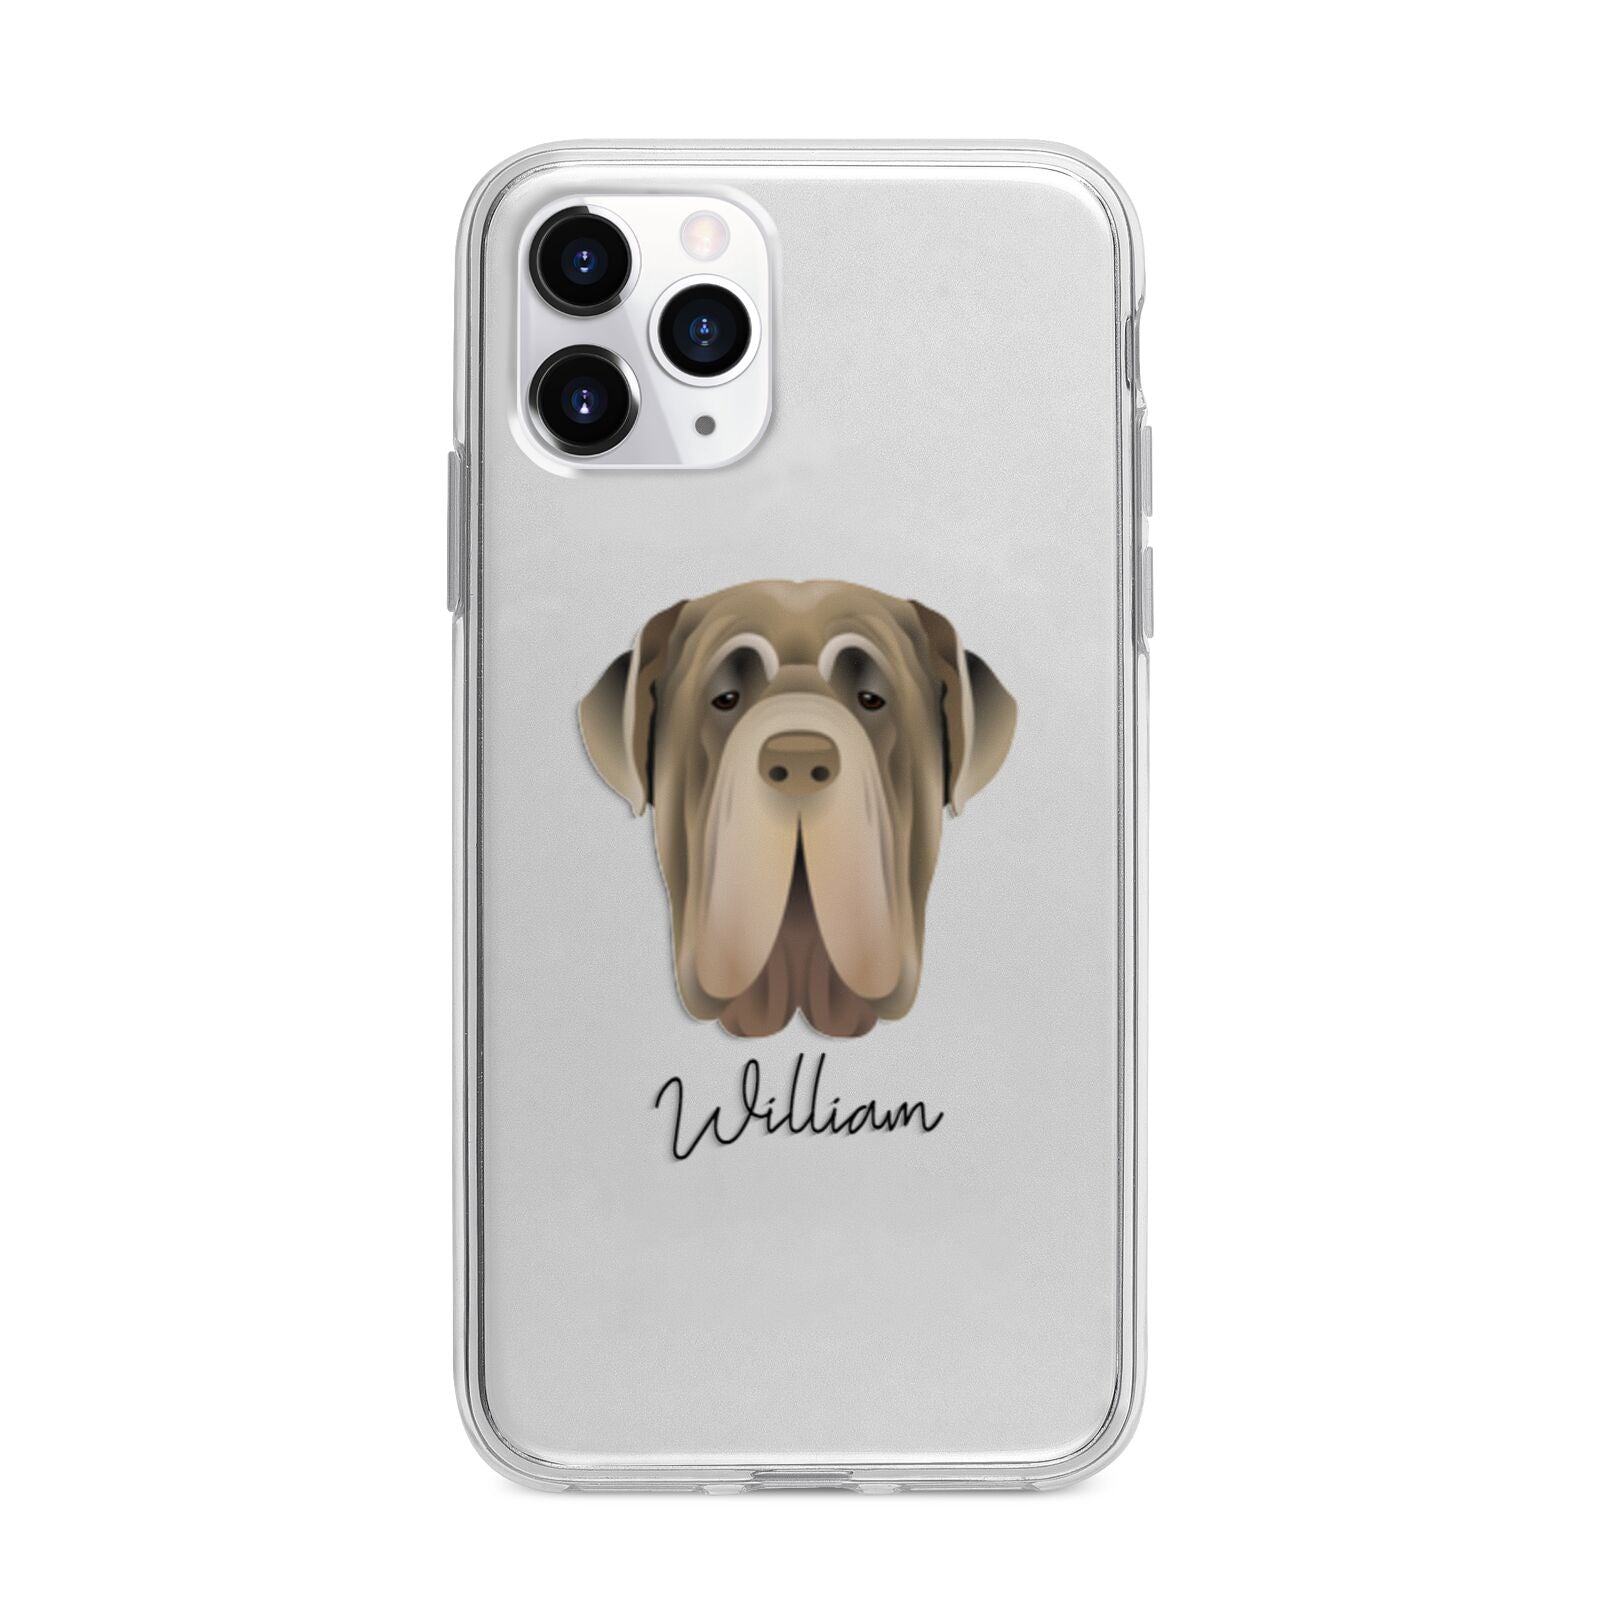 Neapolitan Mastiff Personalised Apple iPhone 11 Pro Max in Silver with Bumper Case